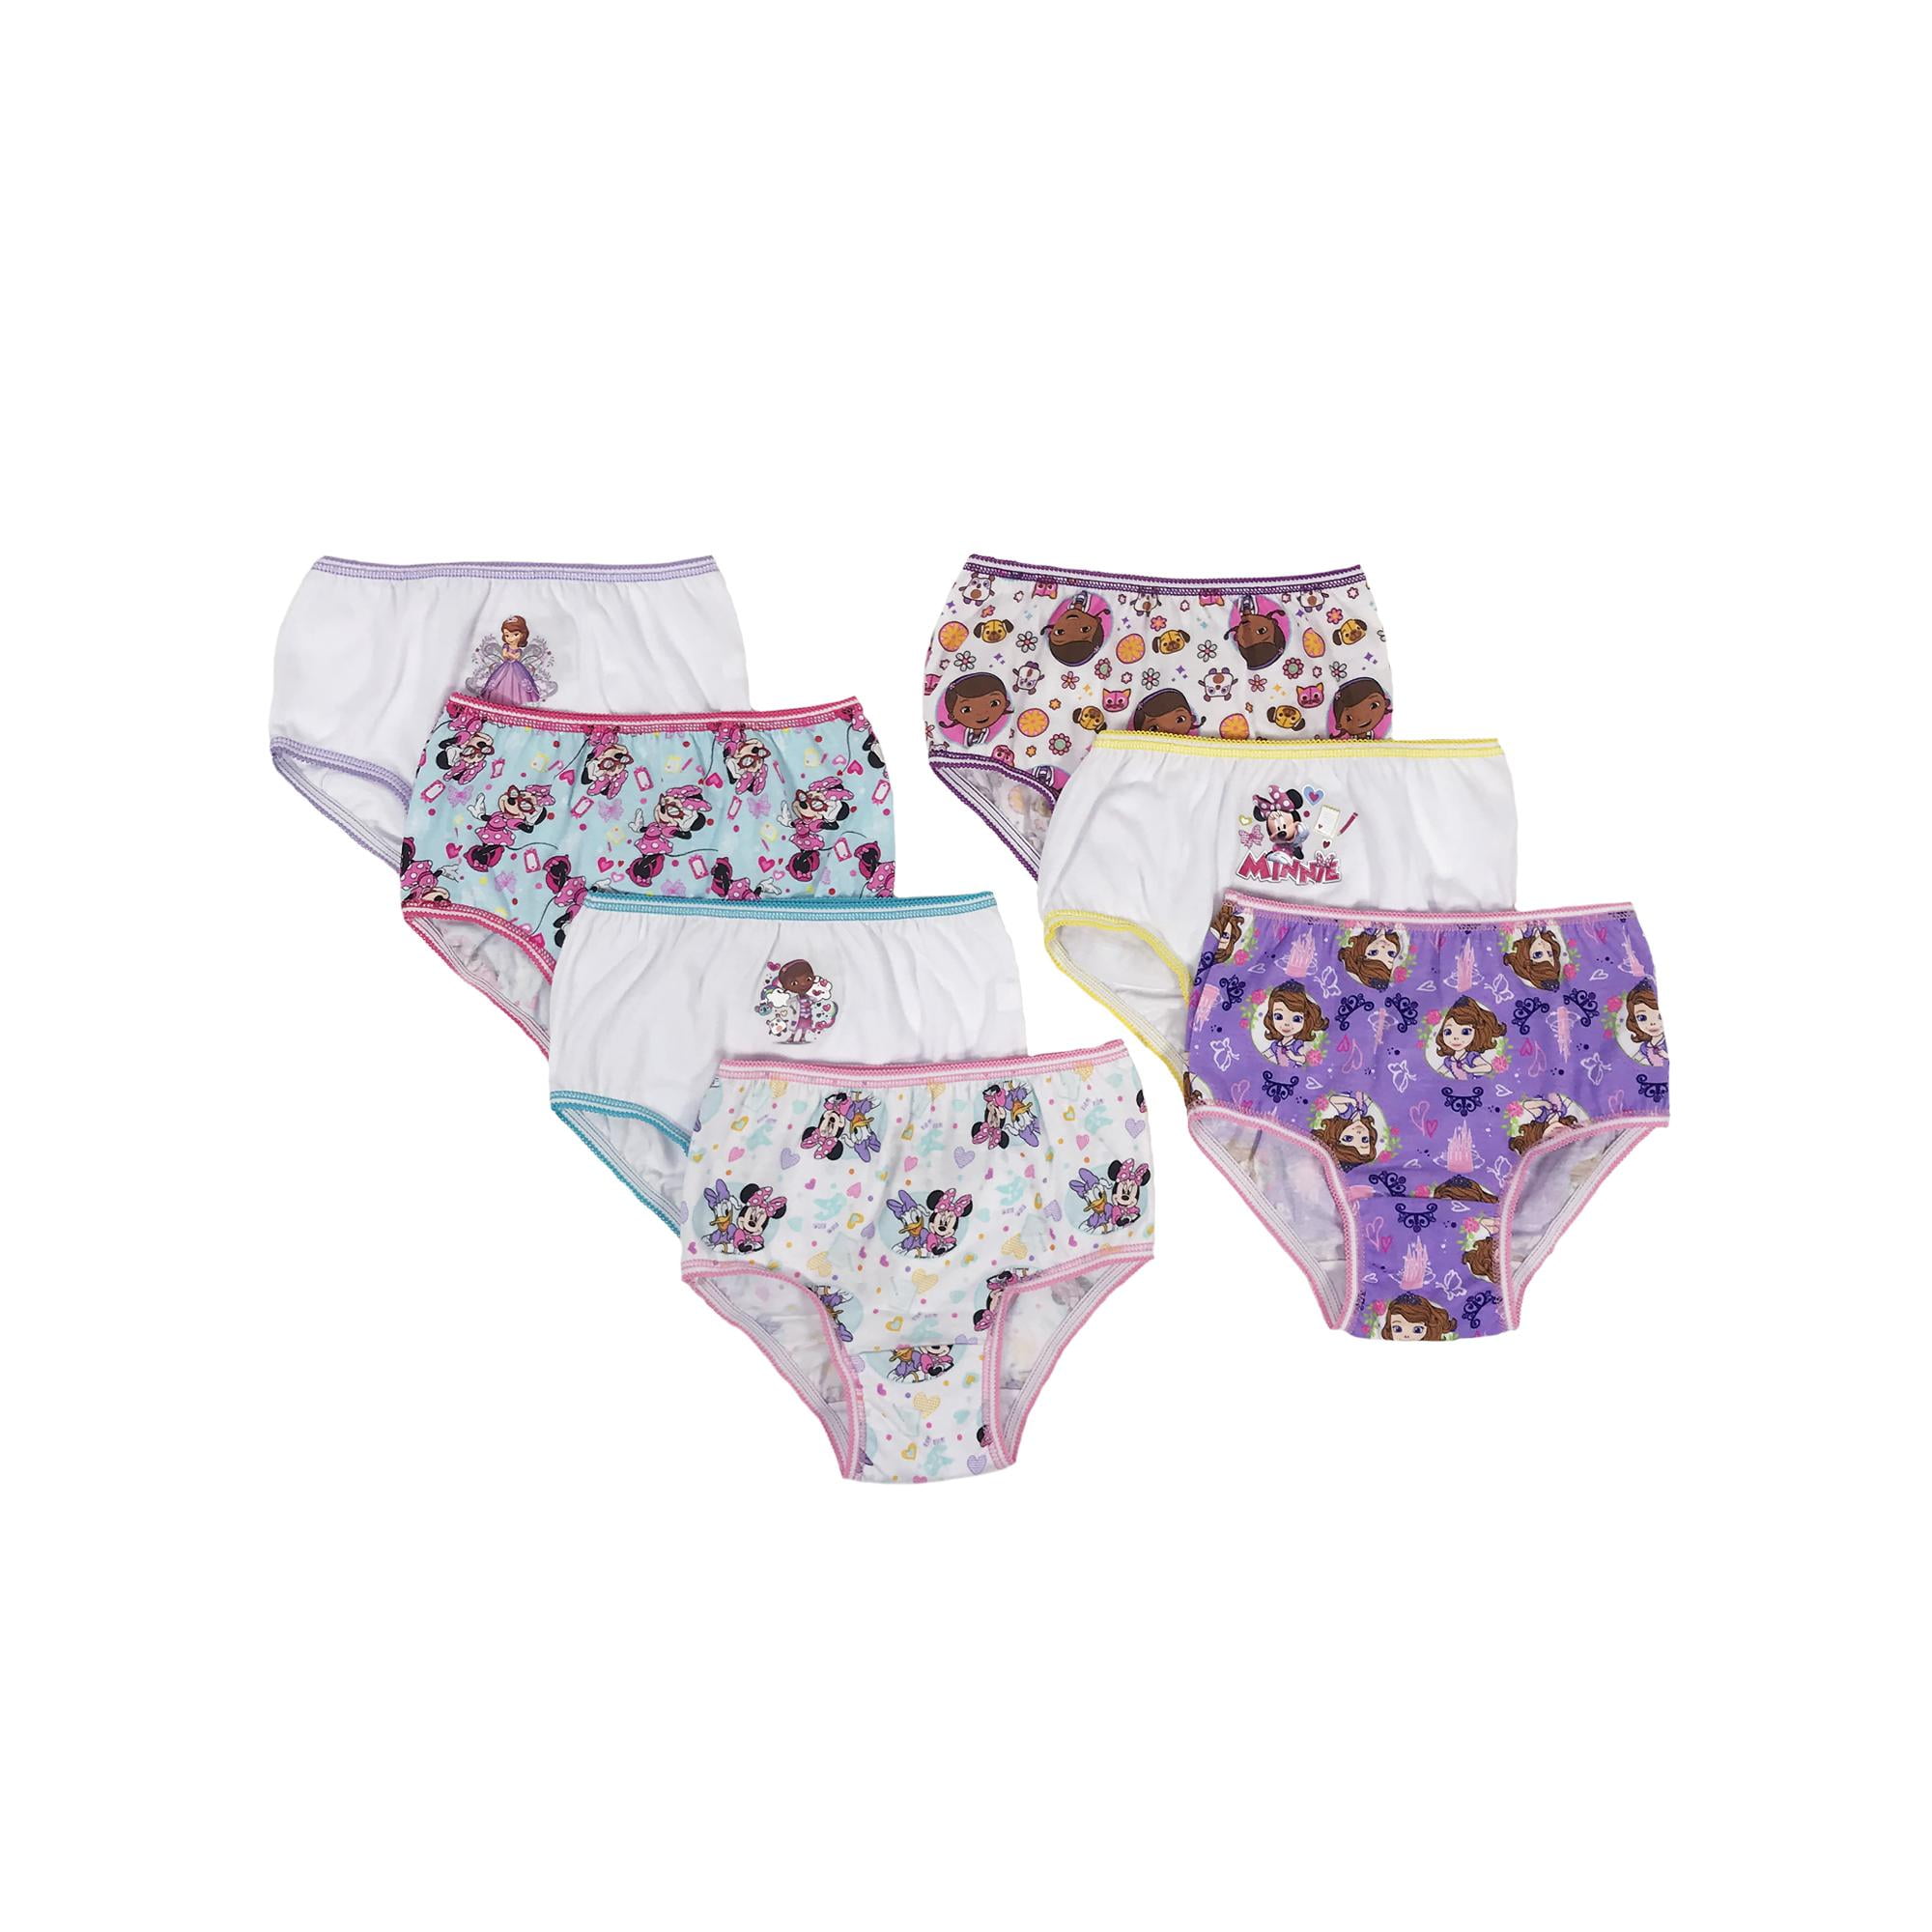 Encanto Toddler Girls Underwear, 6 Pack Sizes 2T-4T